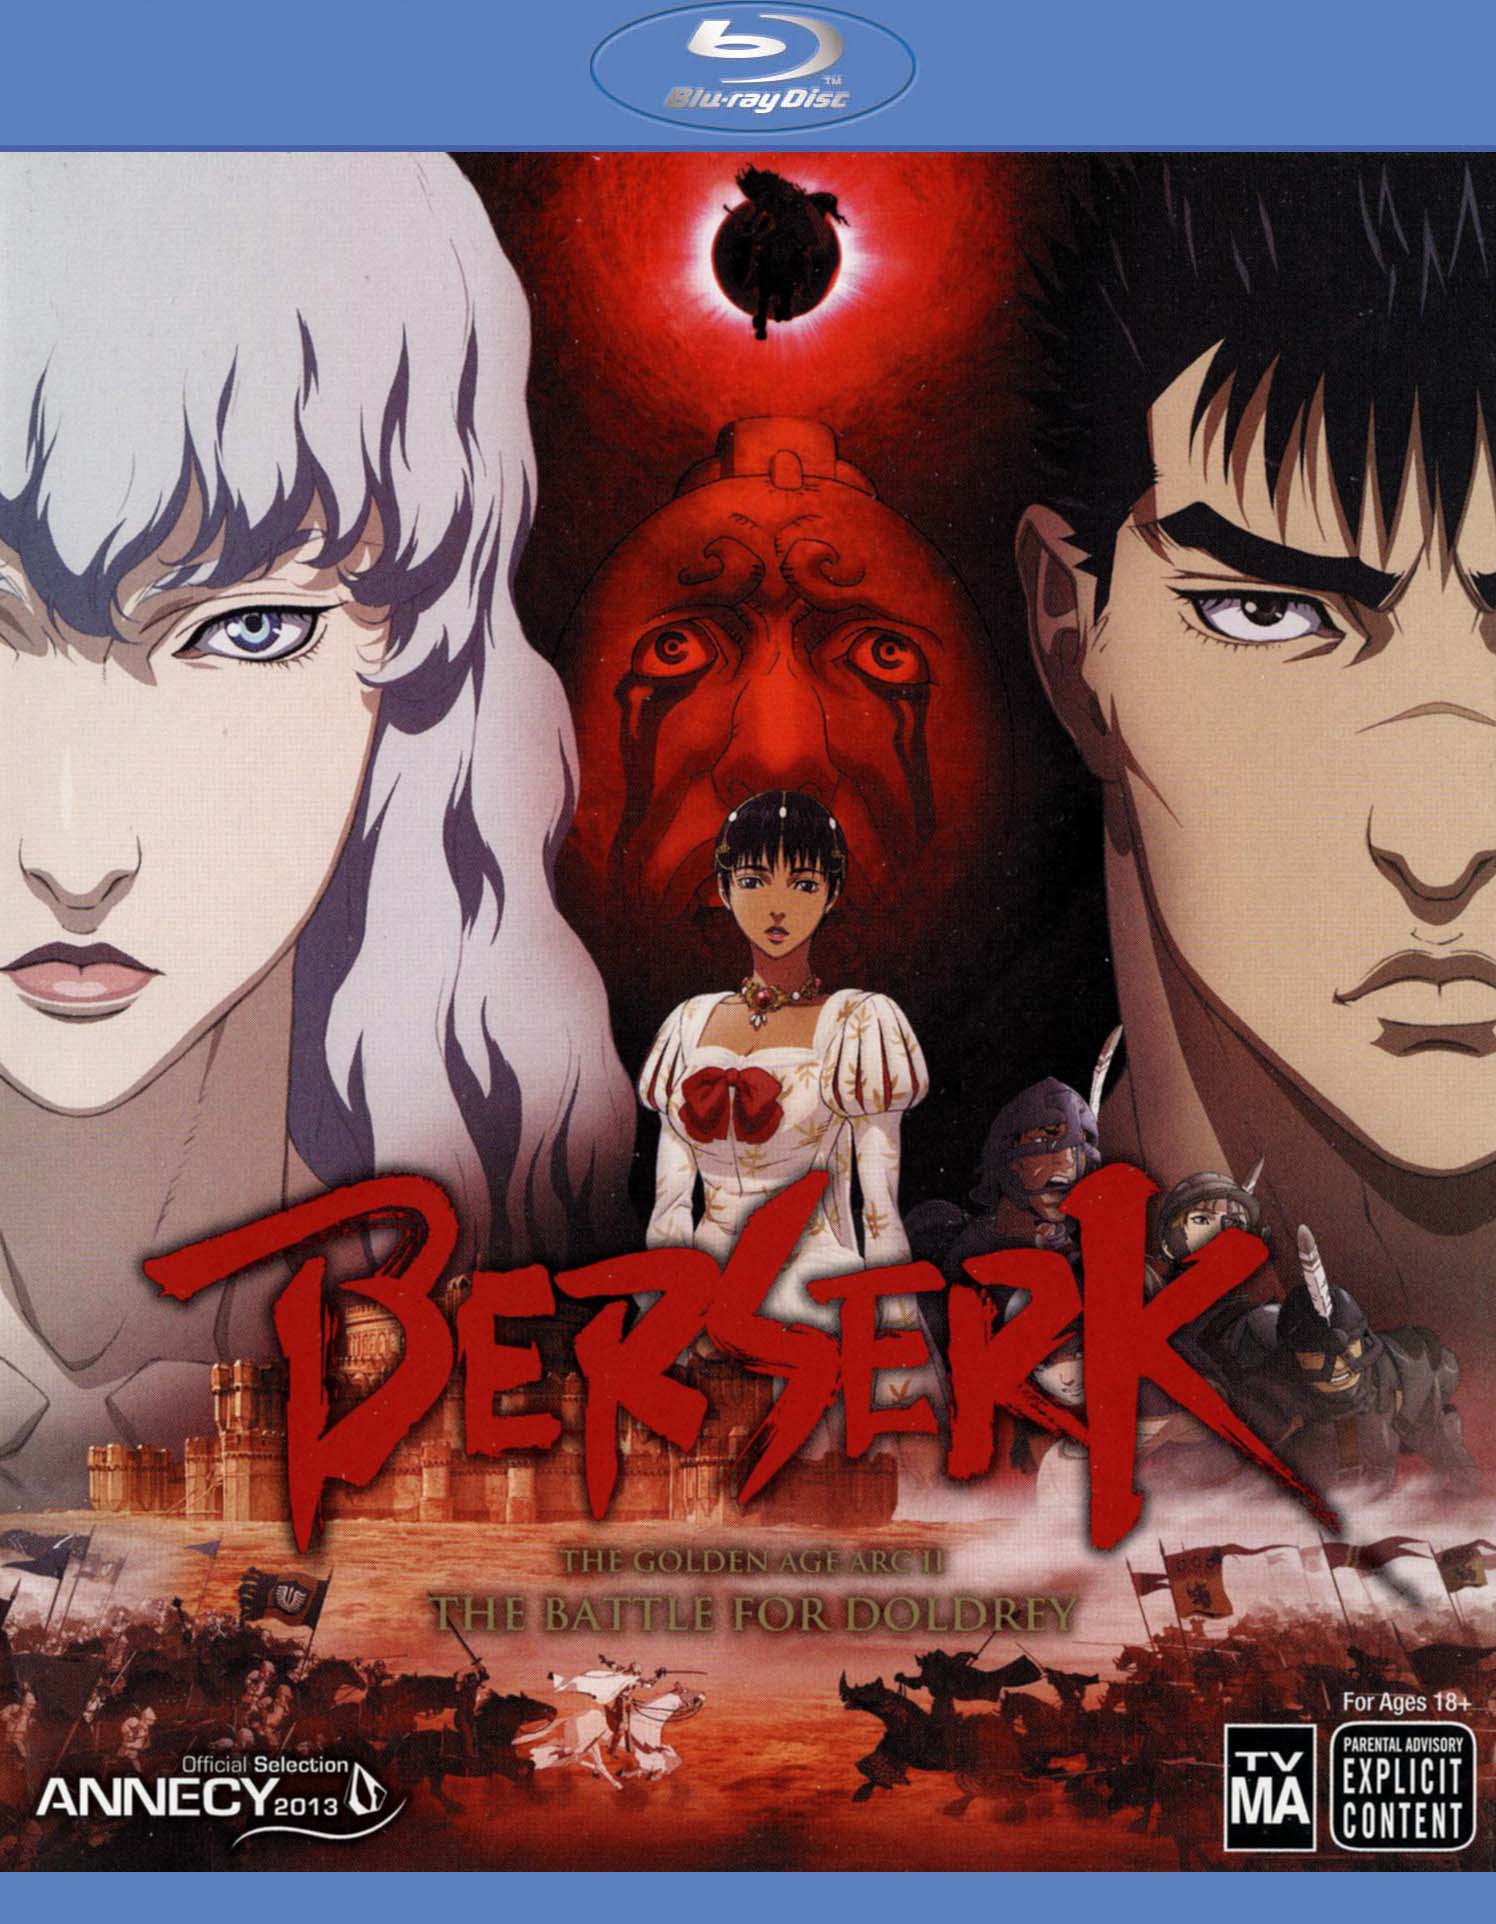 Berserk (1997) vs Berserk: The Golden Age Arc II - The Battle for Doldrey  (2012) : r/Berserk